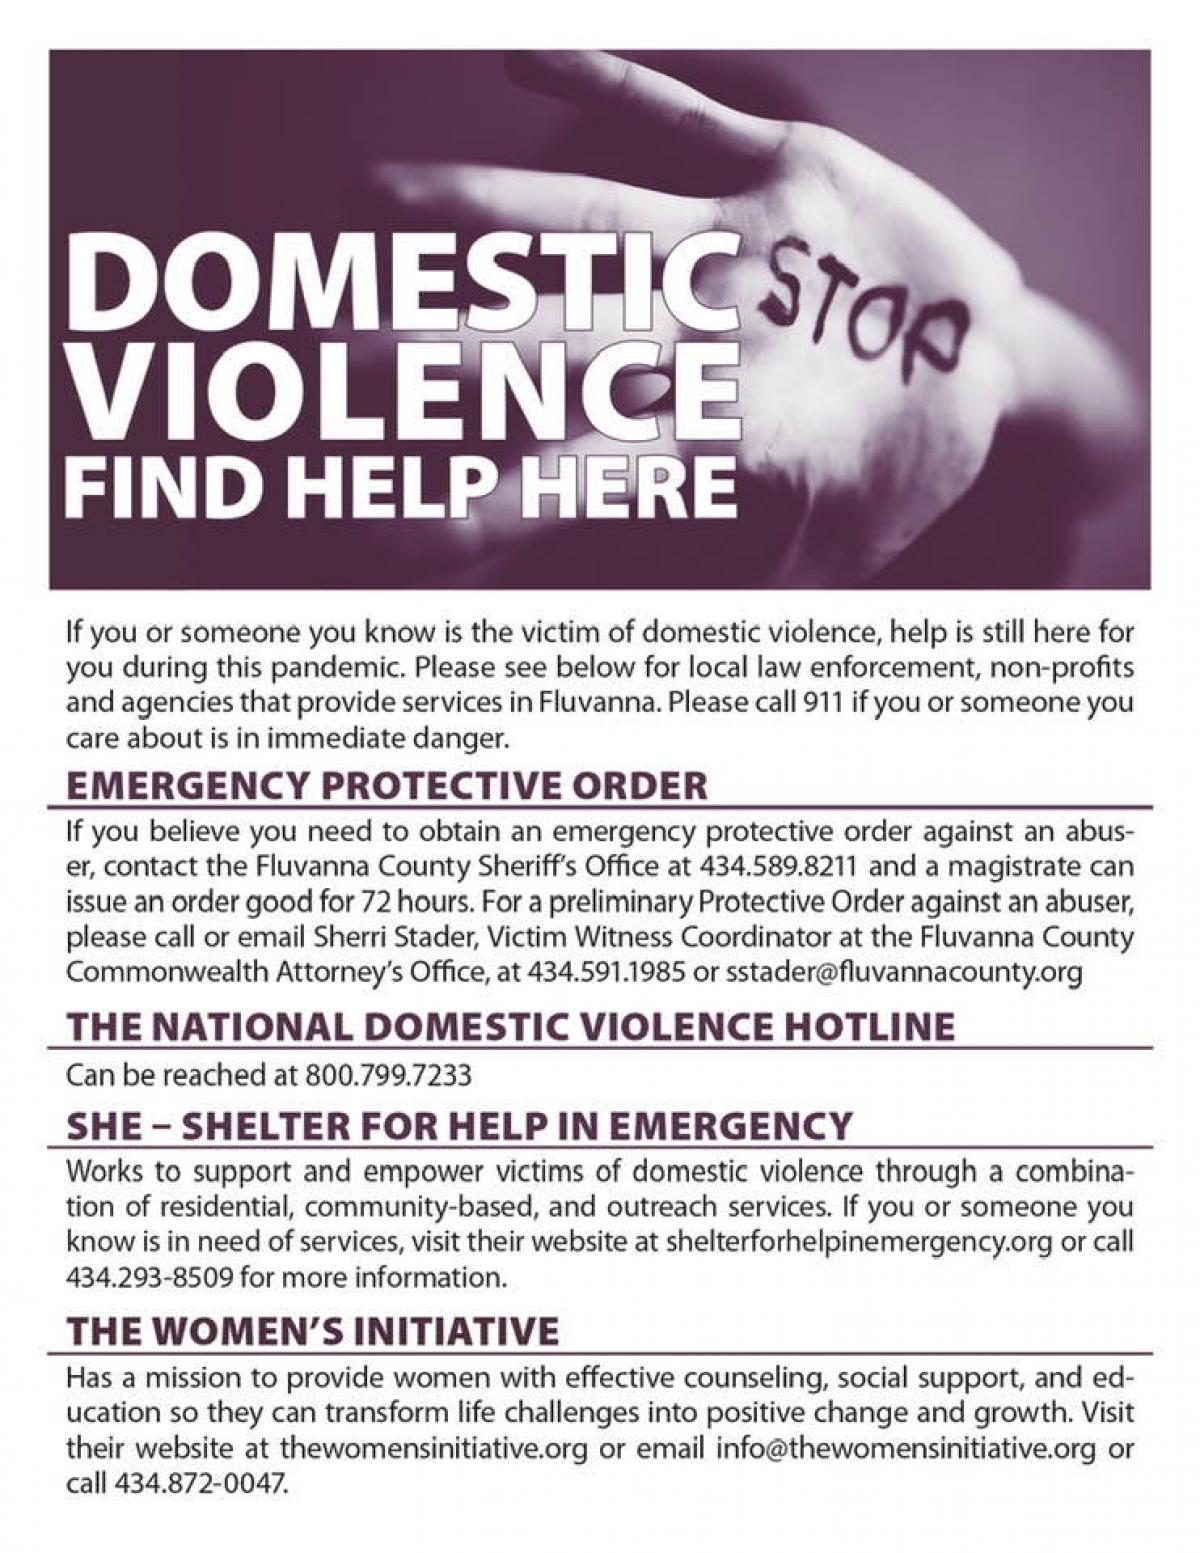 test providing domestic violence resources